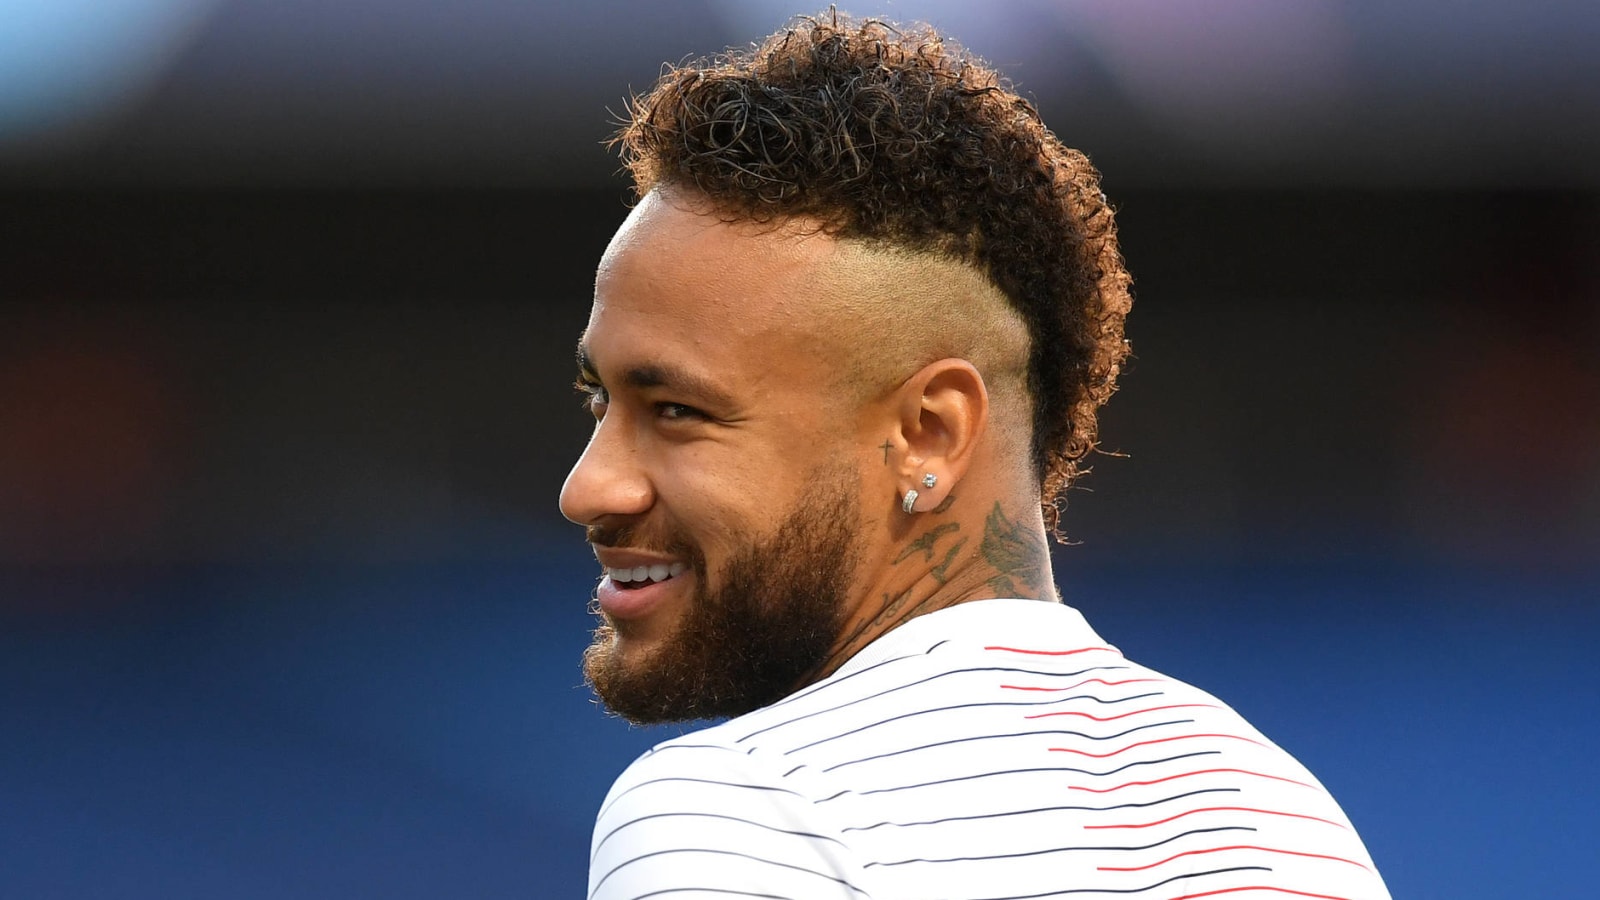 Neymar talked to Messi about joining Paris Saint-Germain